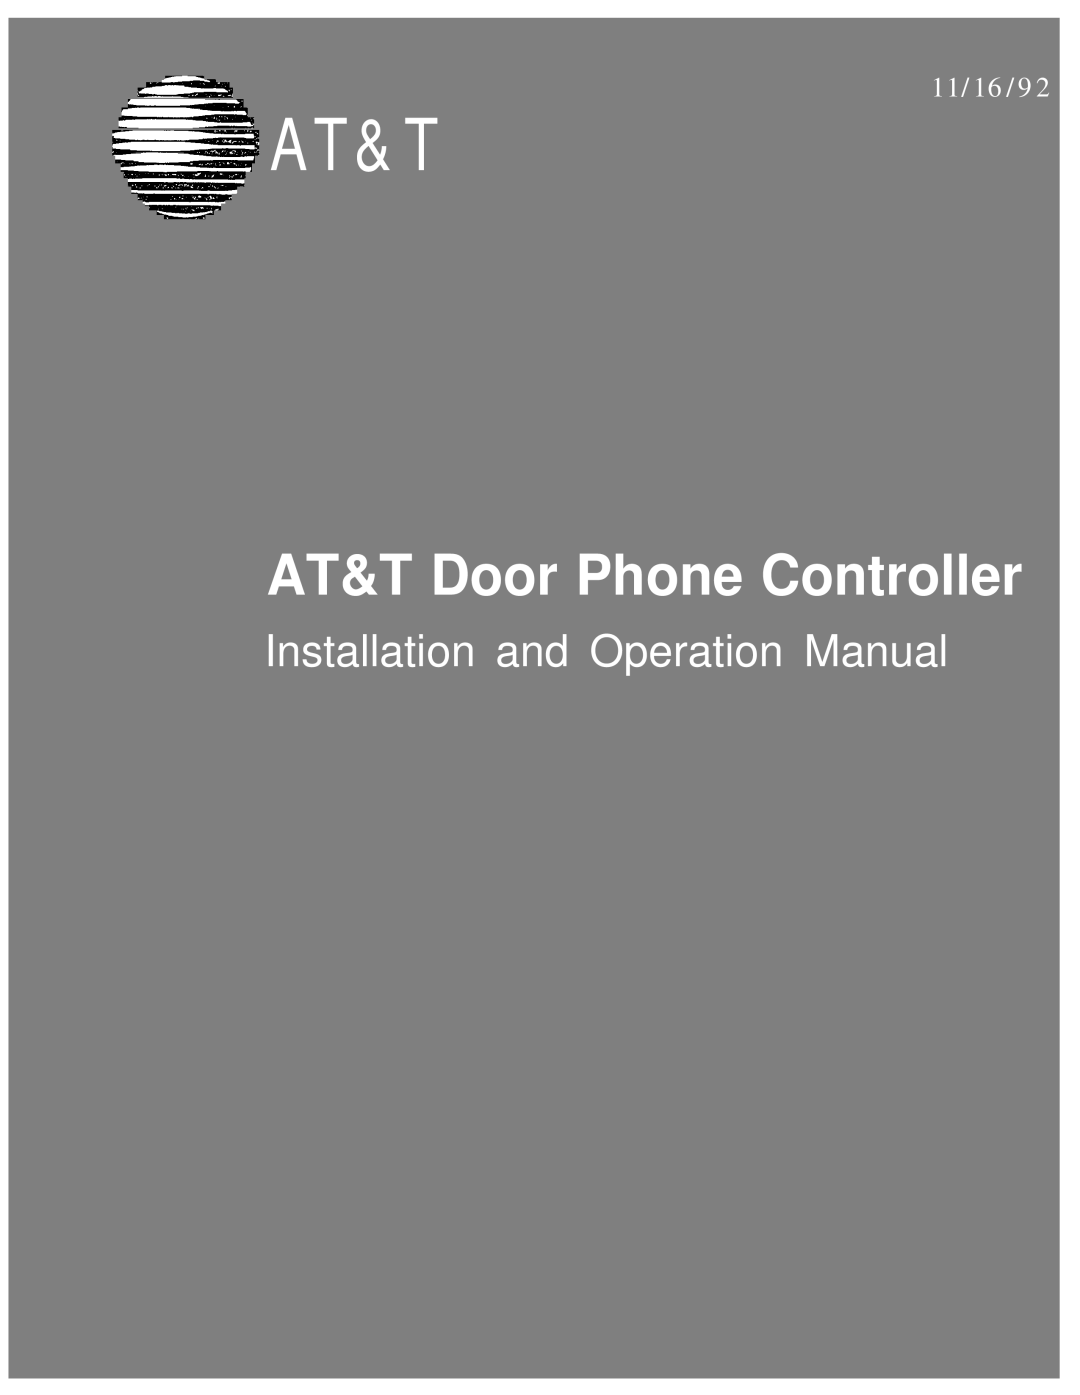 AT&T Door Phone Controller operation manual At&T 